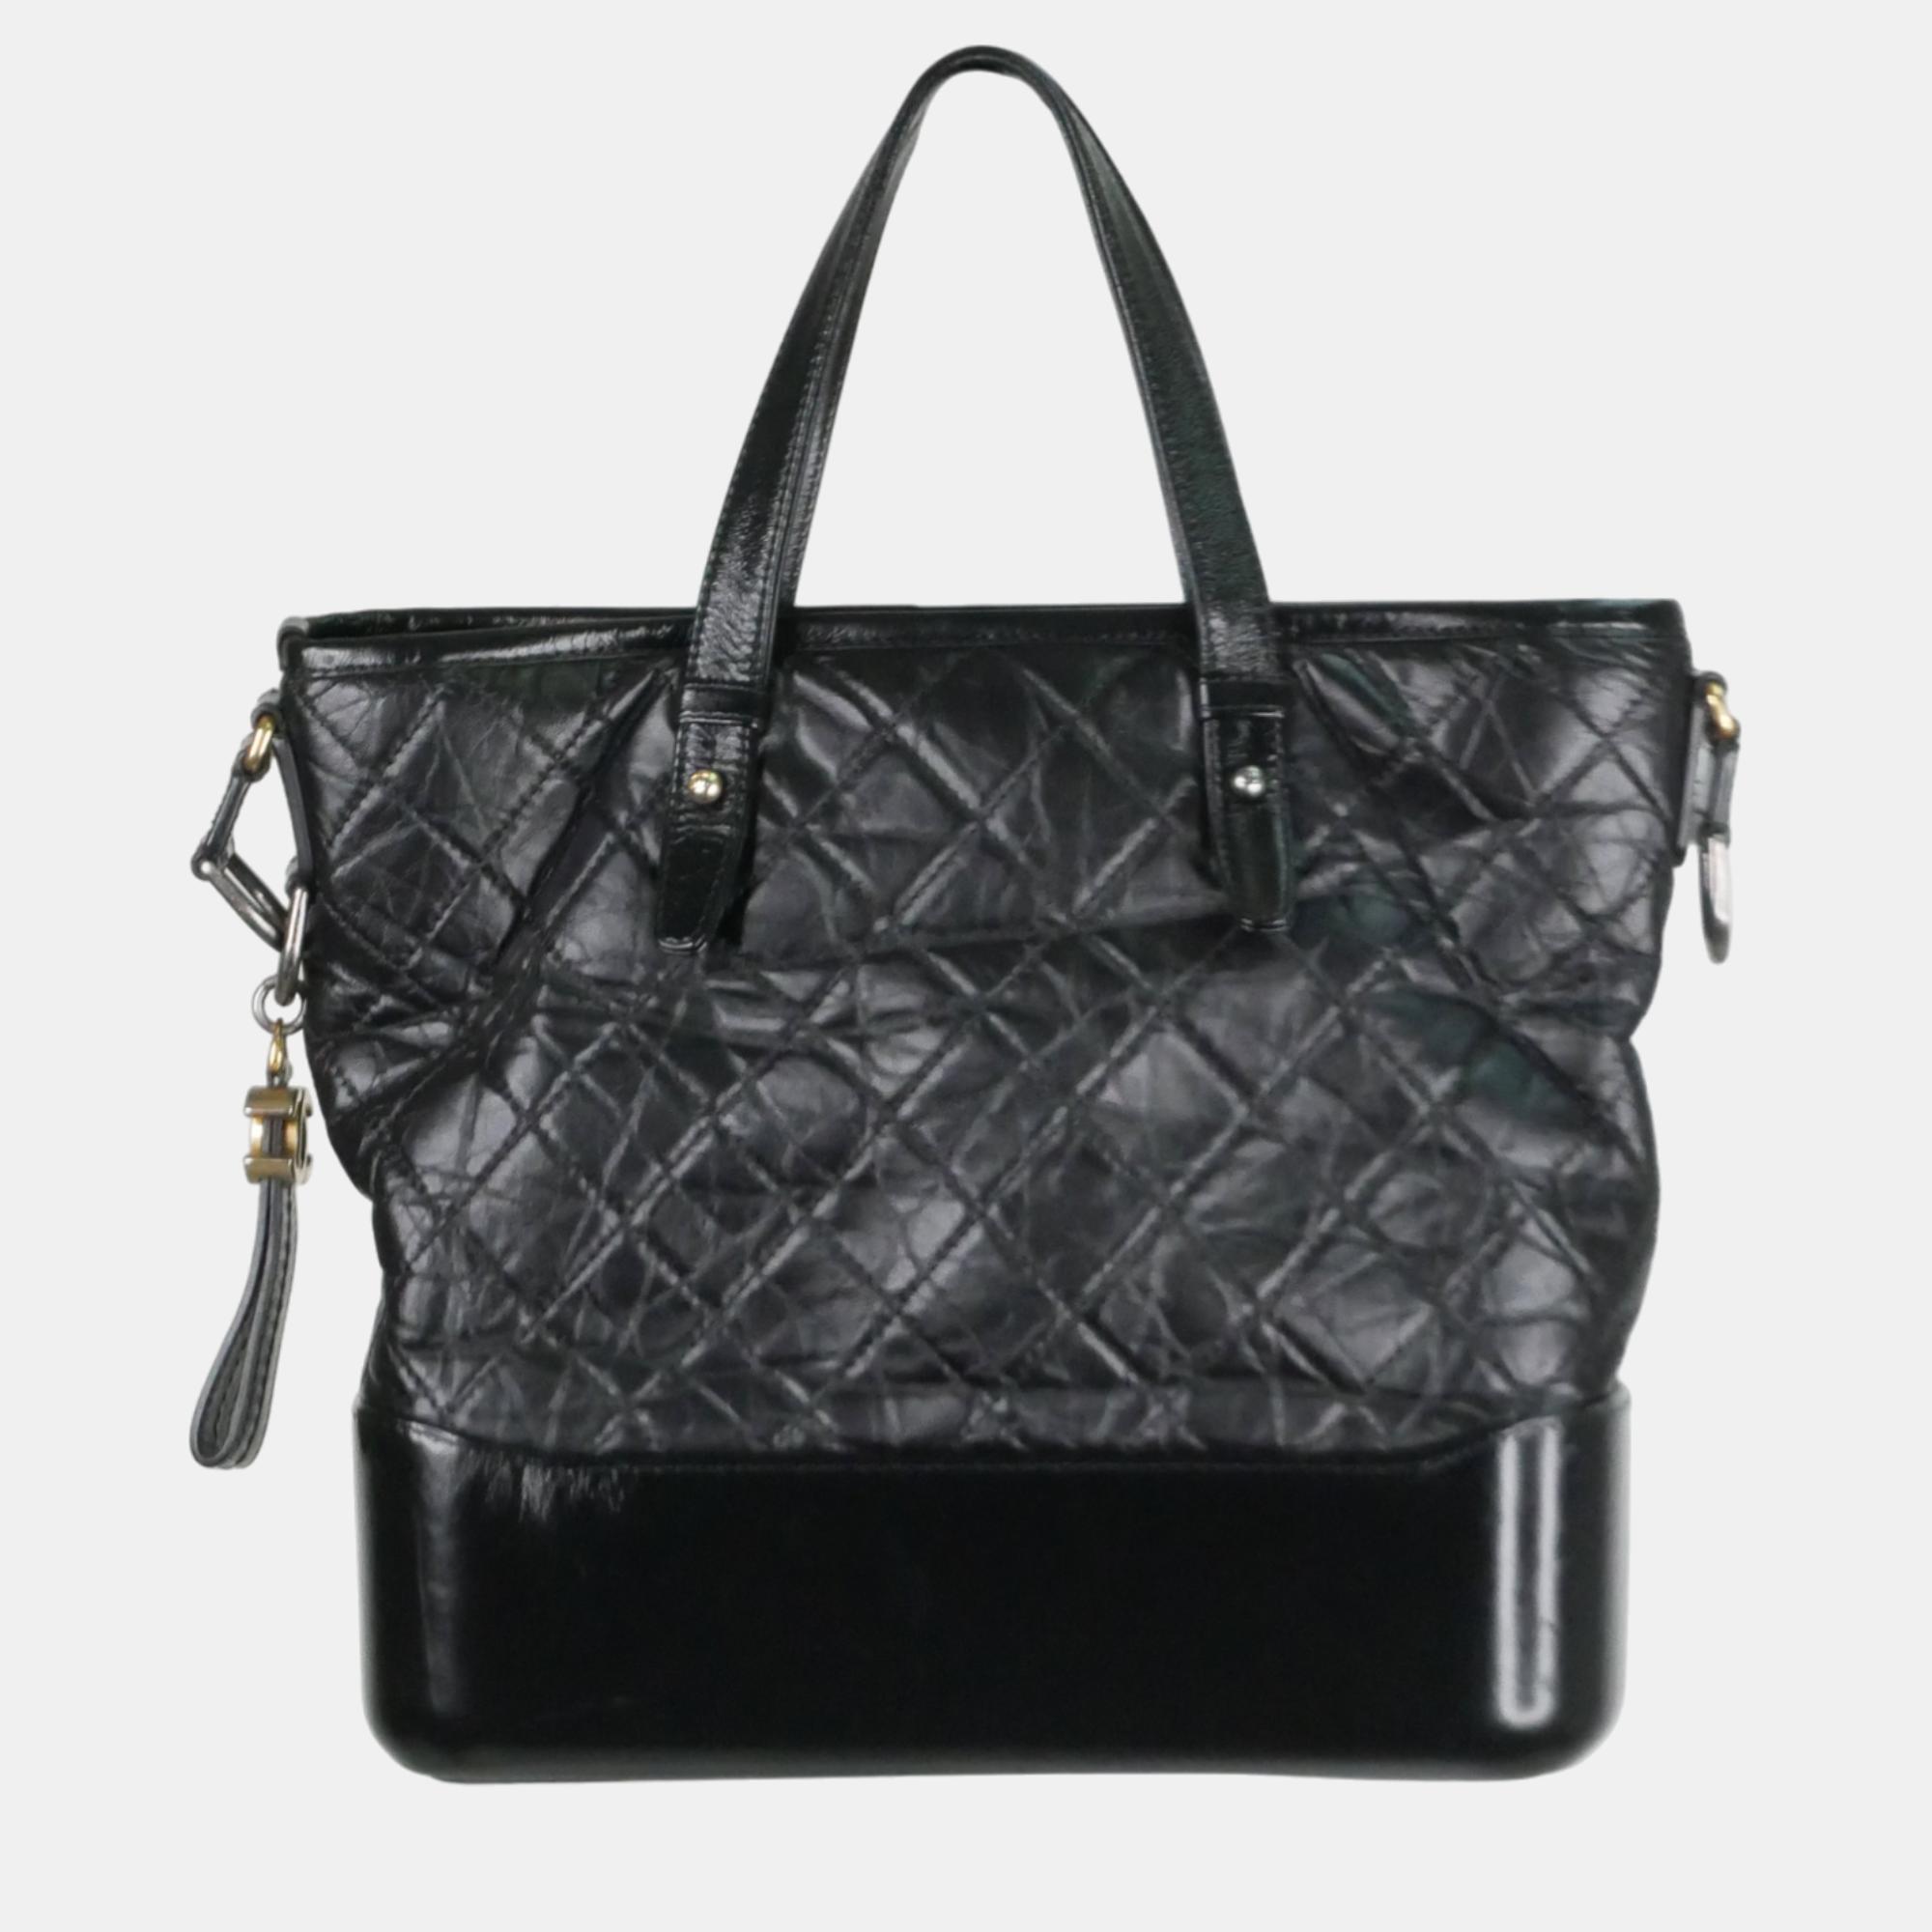 Chanel black gabrielle hobo bag